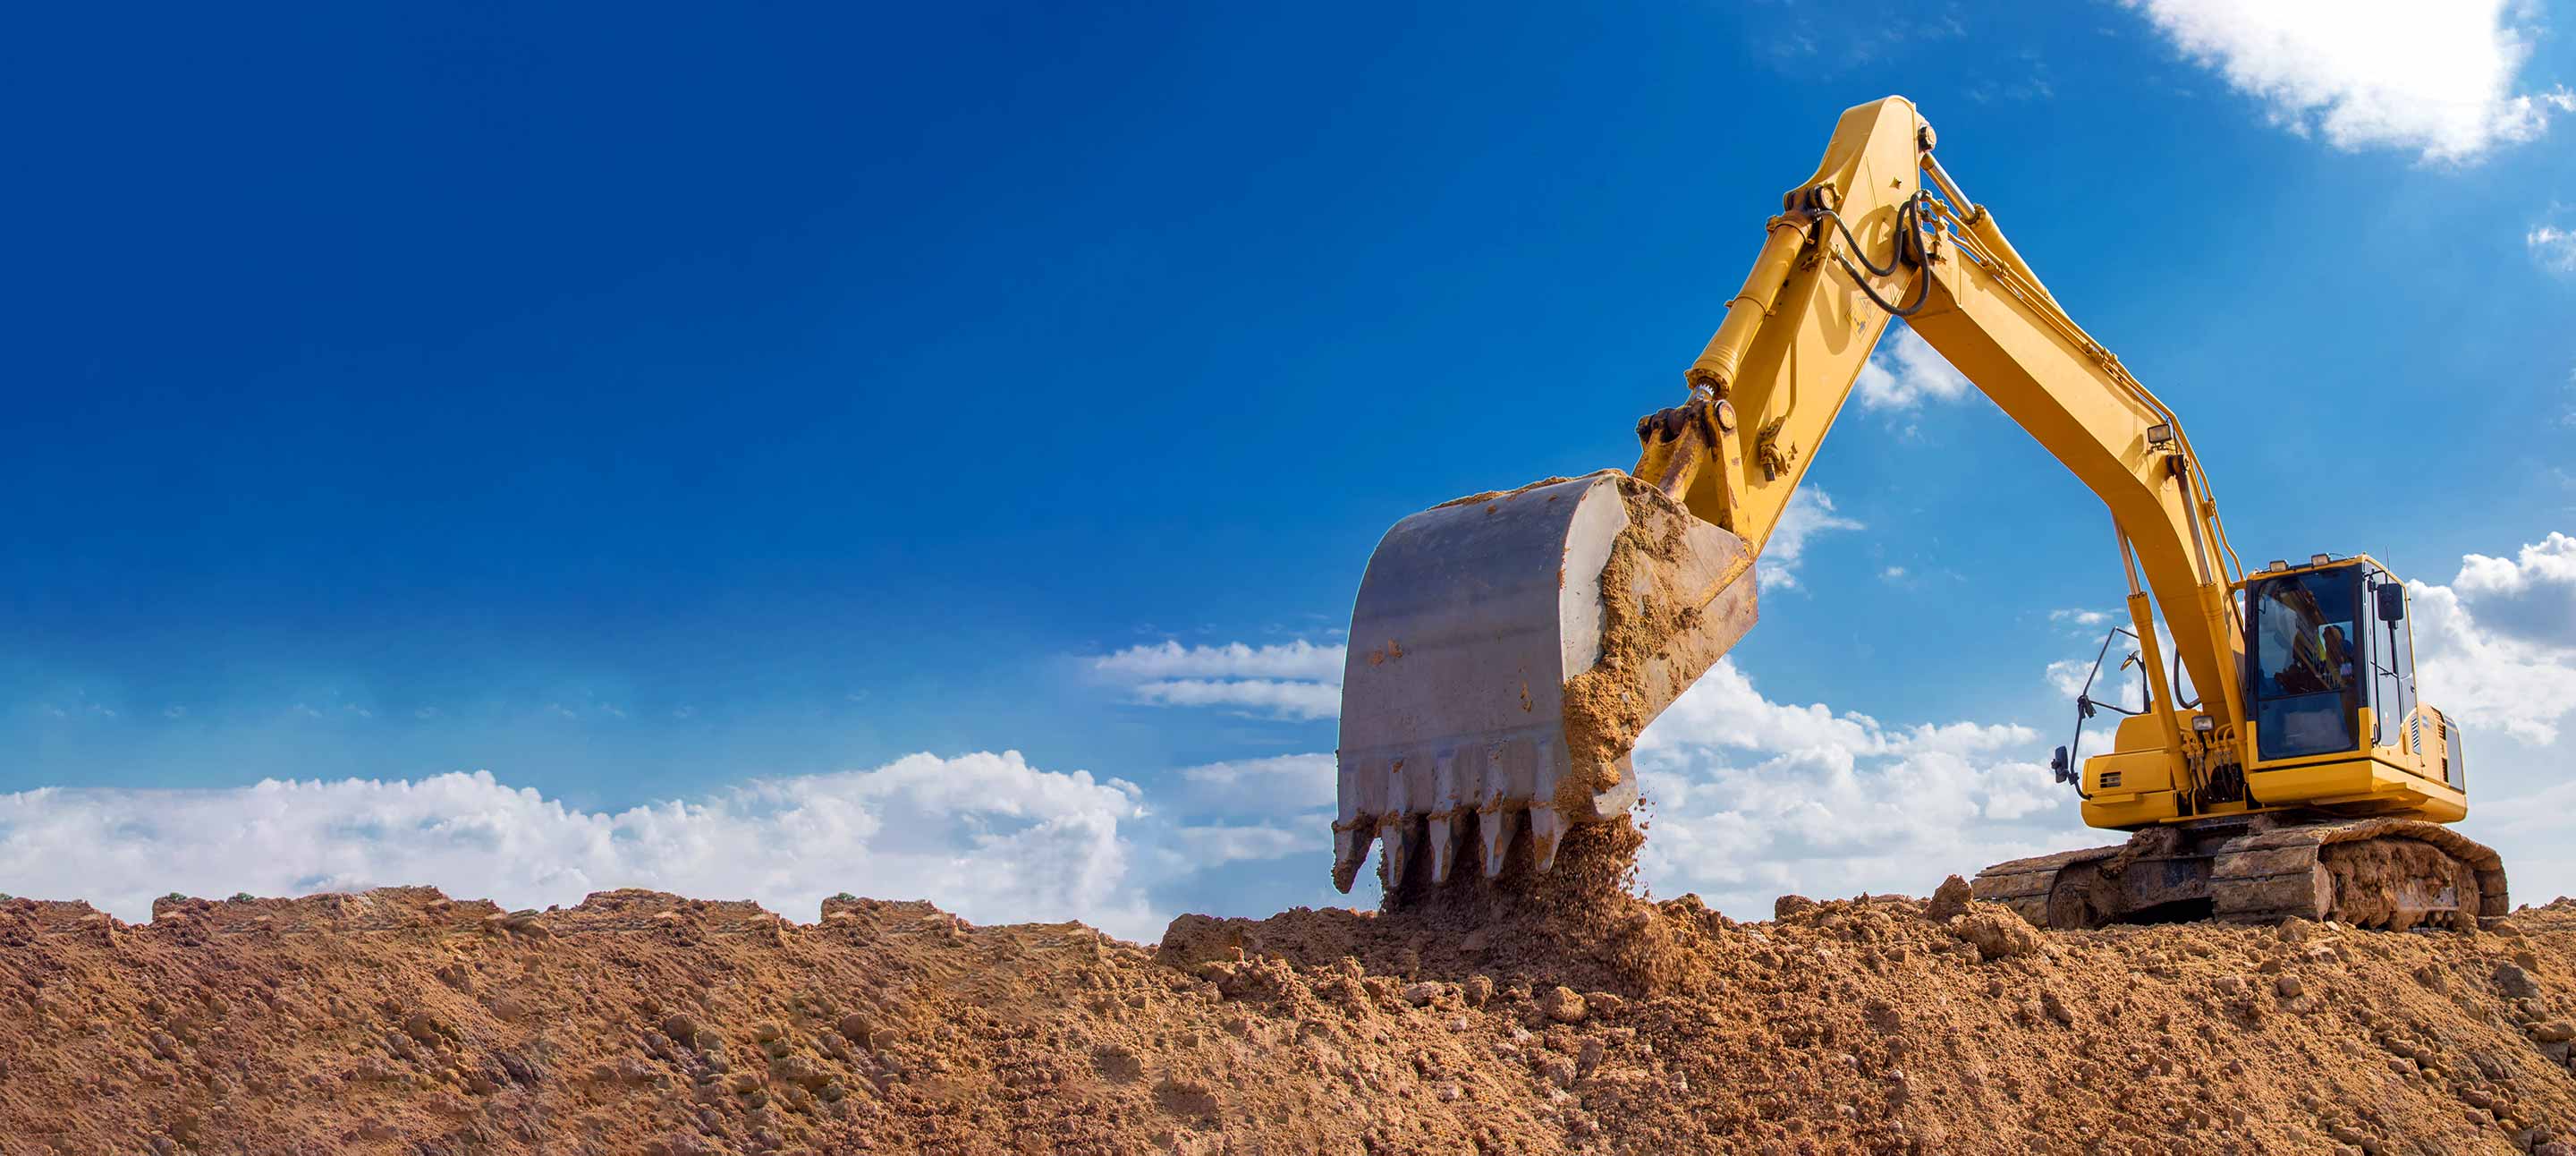 Crane digging up dirt at a construction site